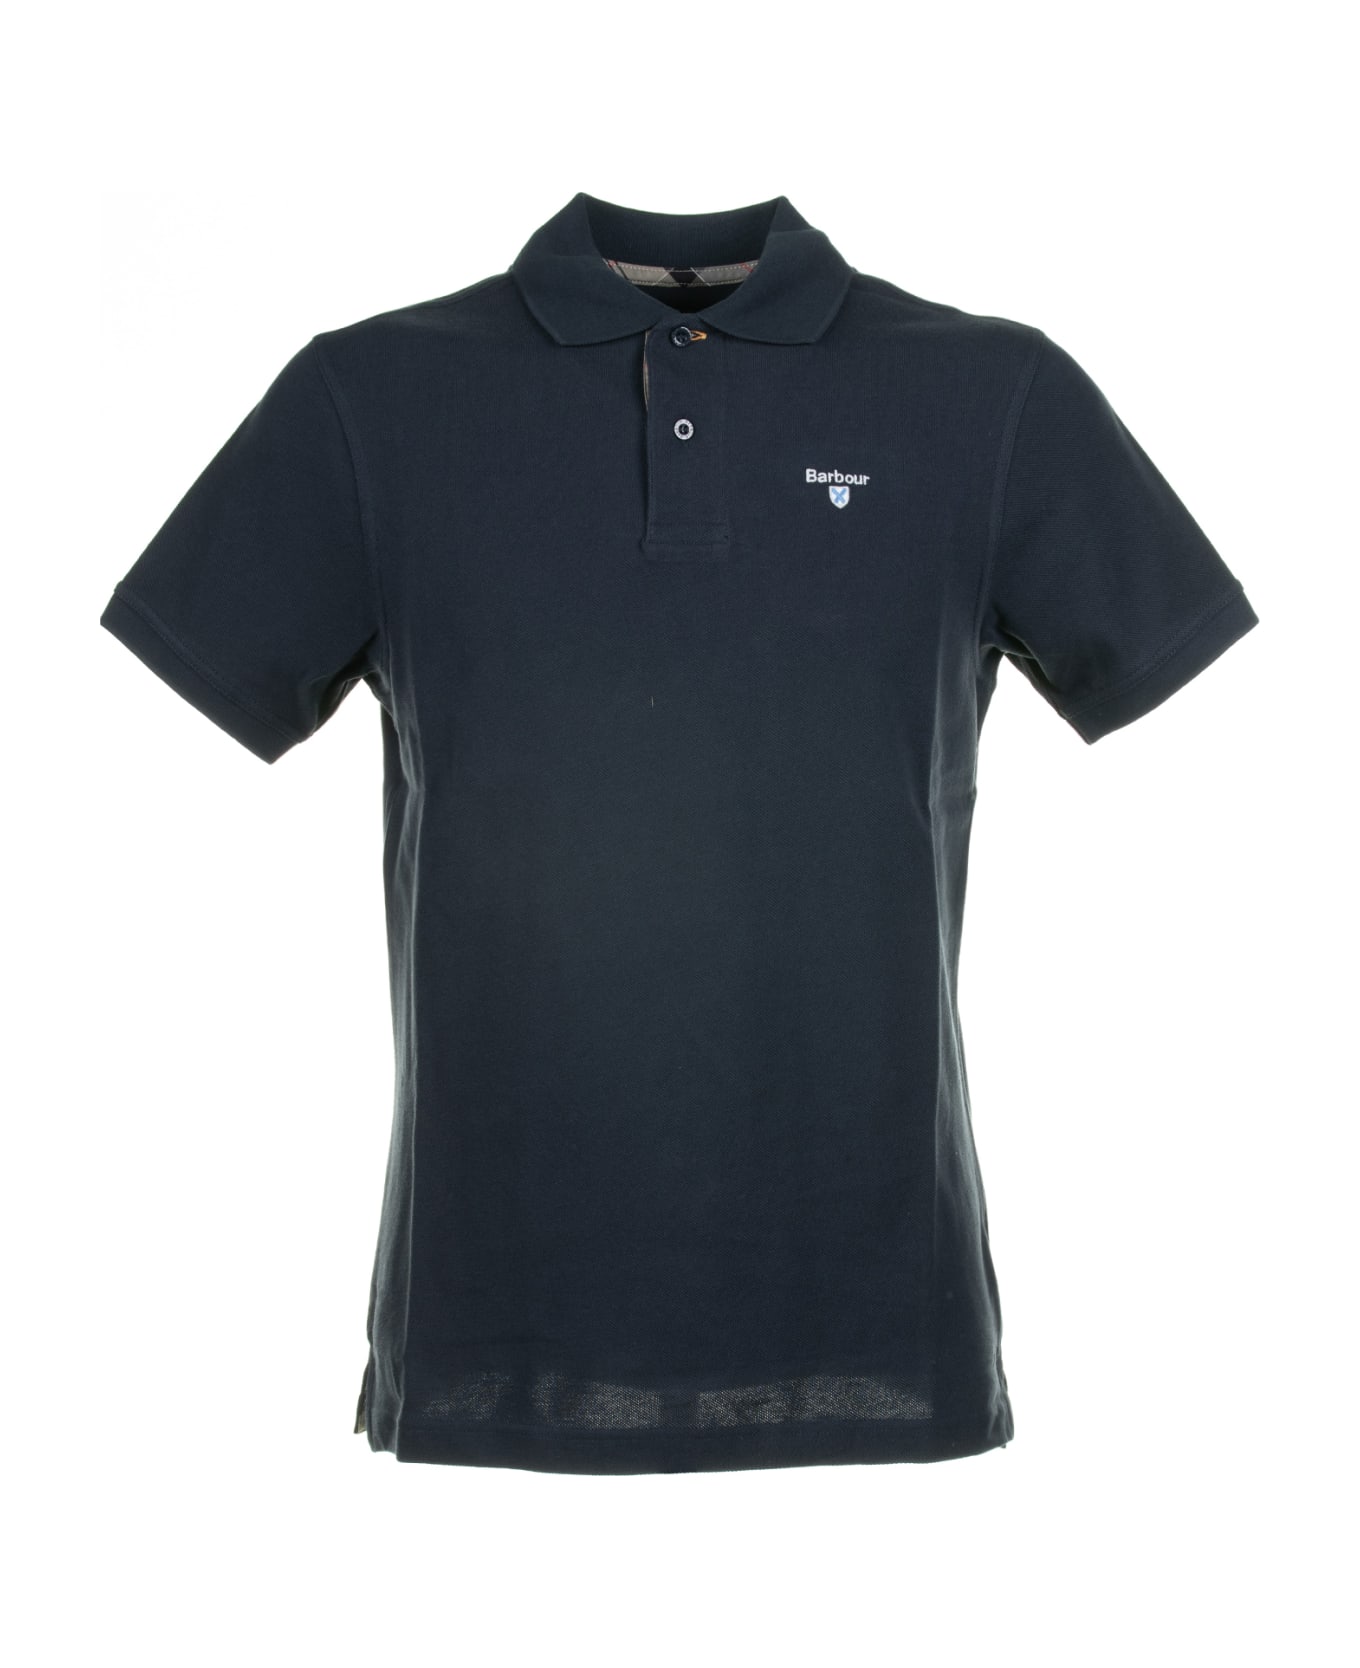 Barbour Navy Blue Short-sleeved Piqué Polo Shirt - NEW NAVY